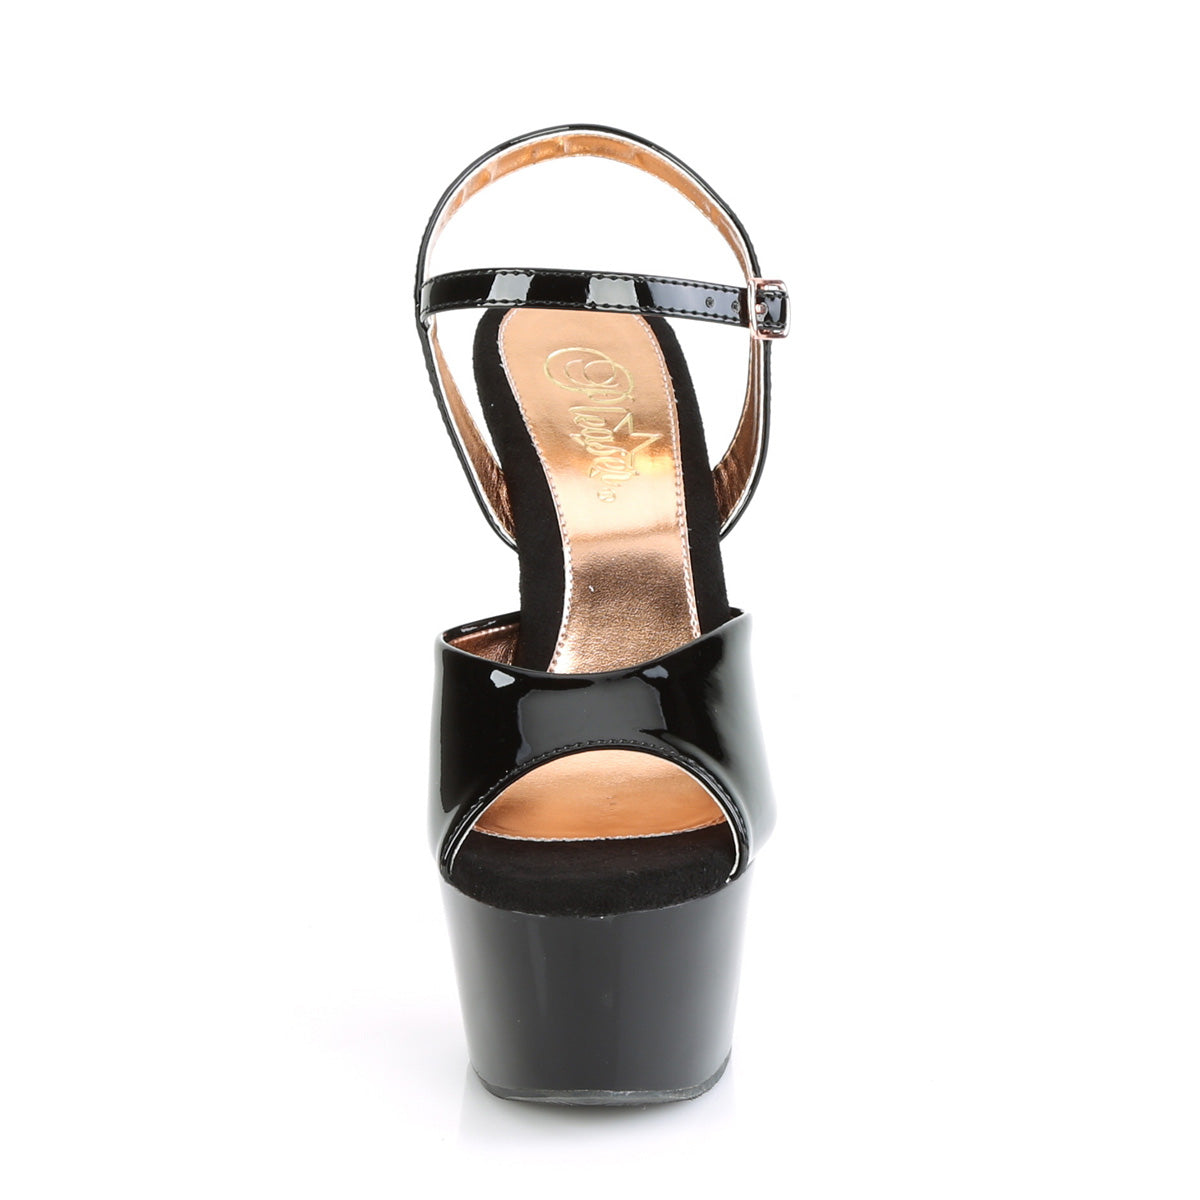 Pleaser Womens Sandals ASPIRE-609TT Blk Pat/Blk-Rose Gold Chrome